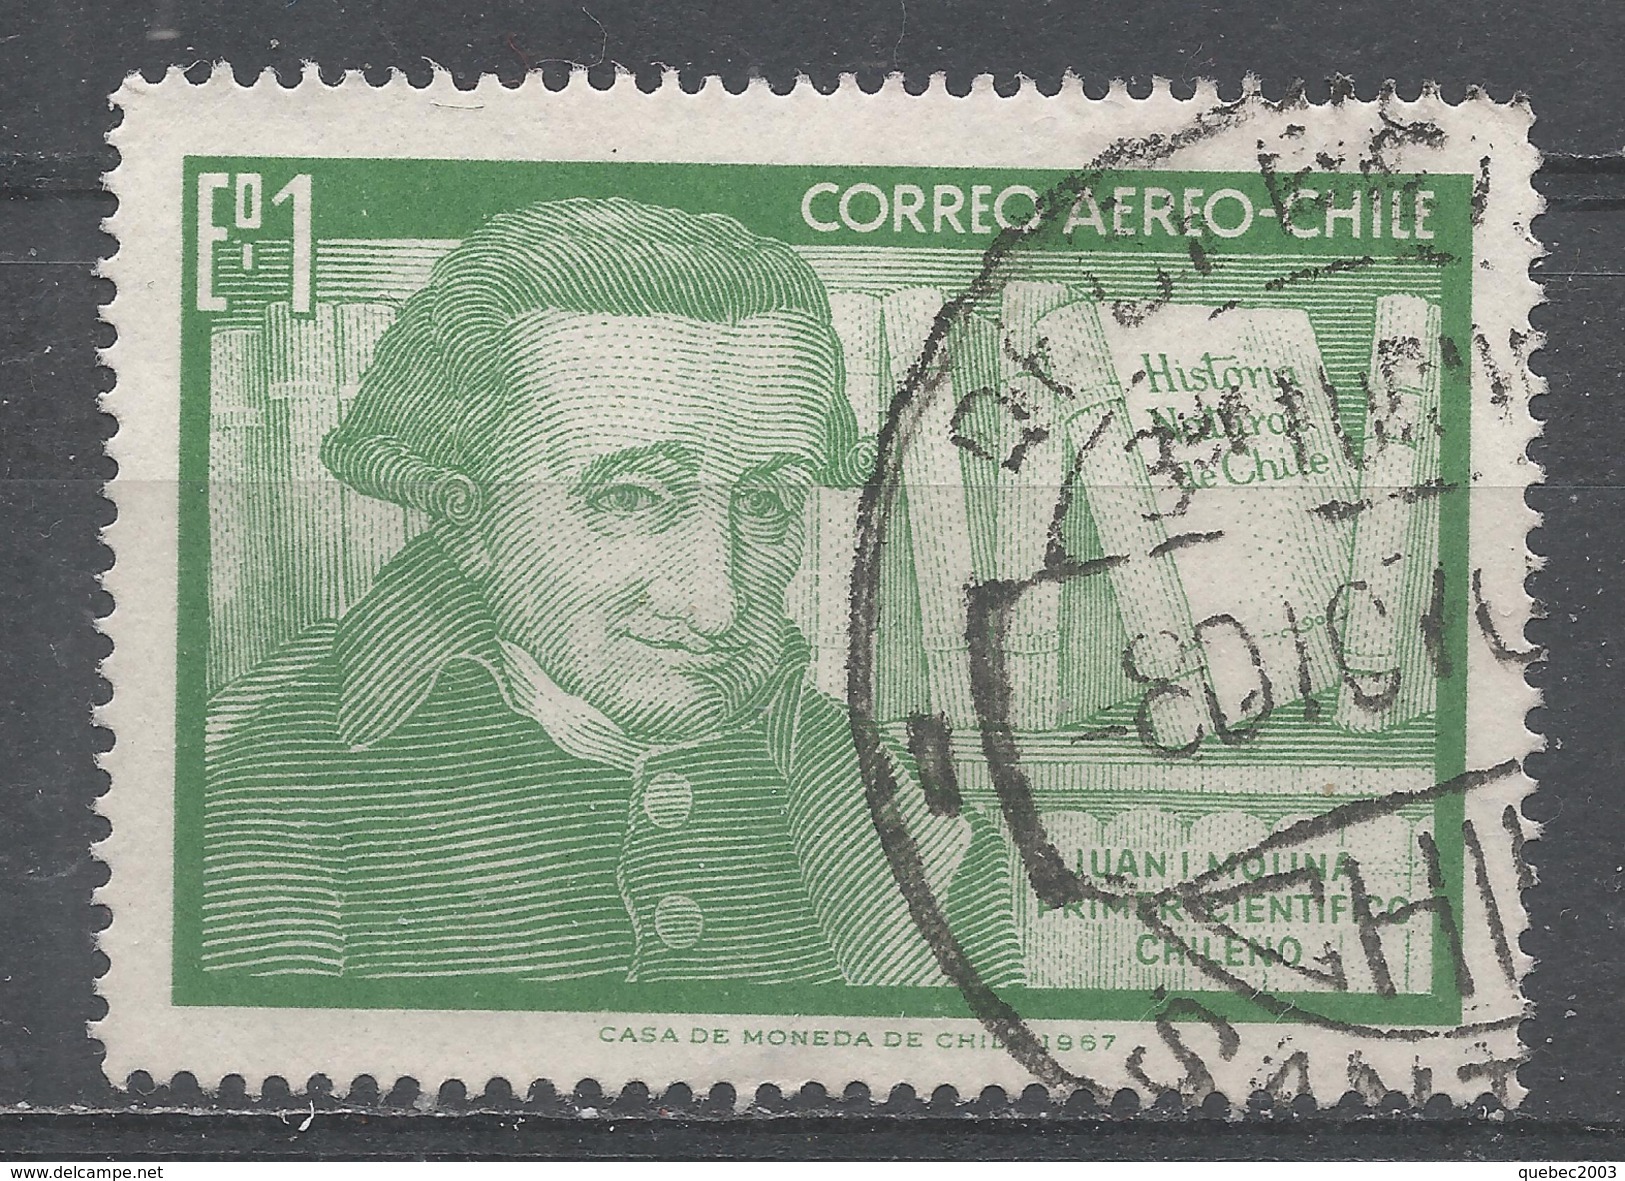 Chile 1968. Scott #C282 (U) Juan I. Molina Educator And Scientist *Complete Issue* - Chili